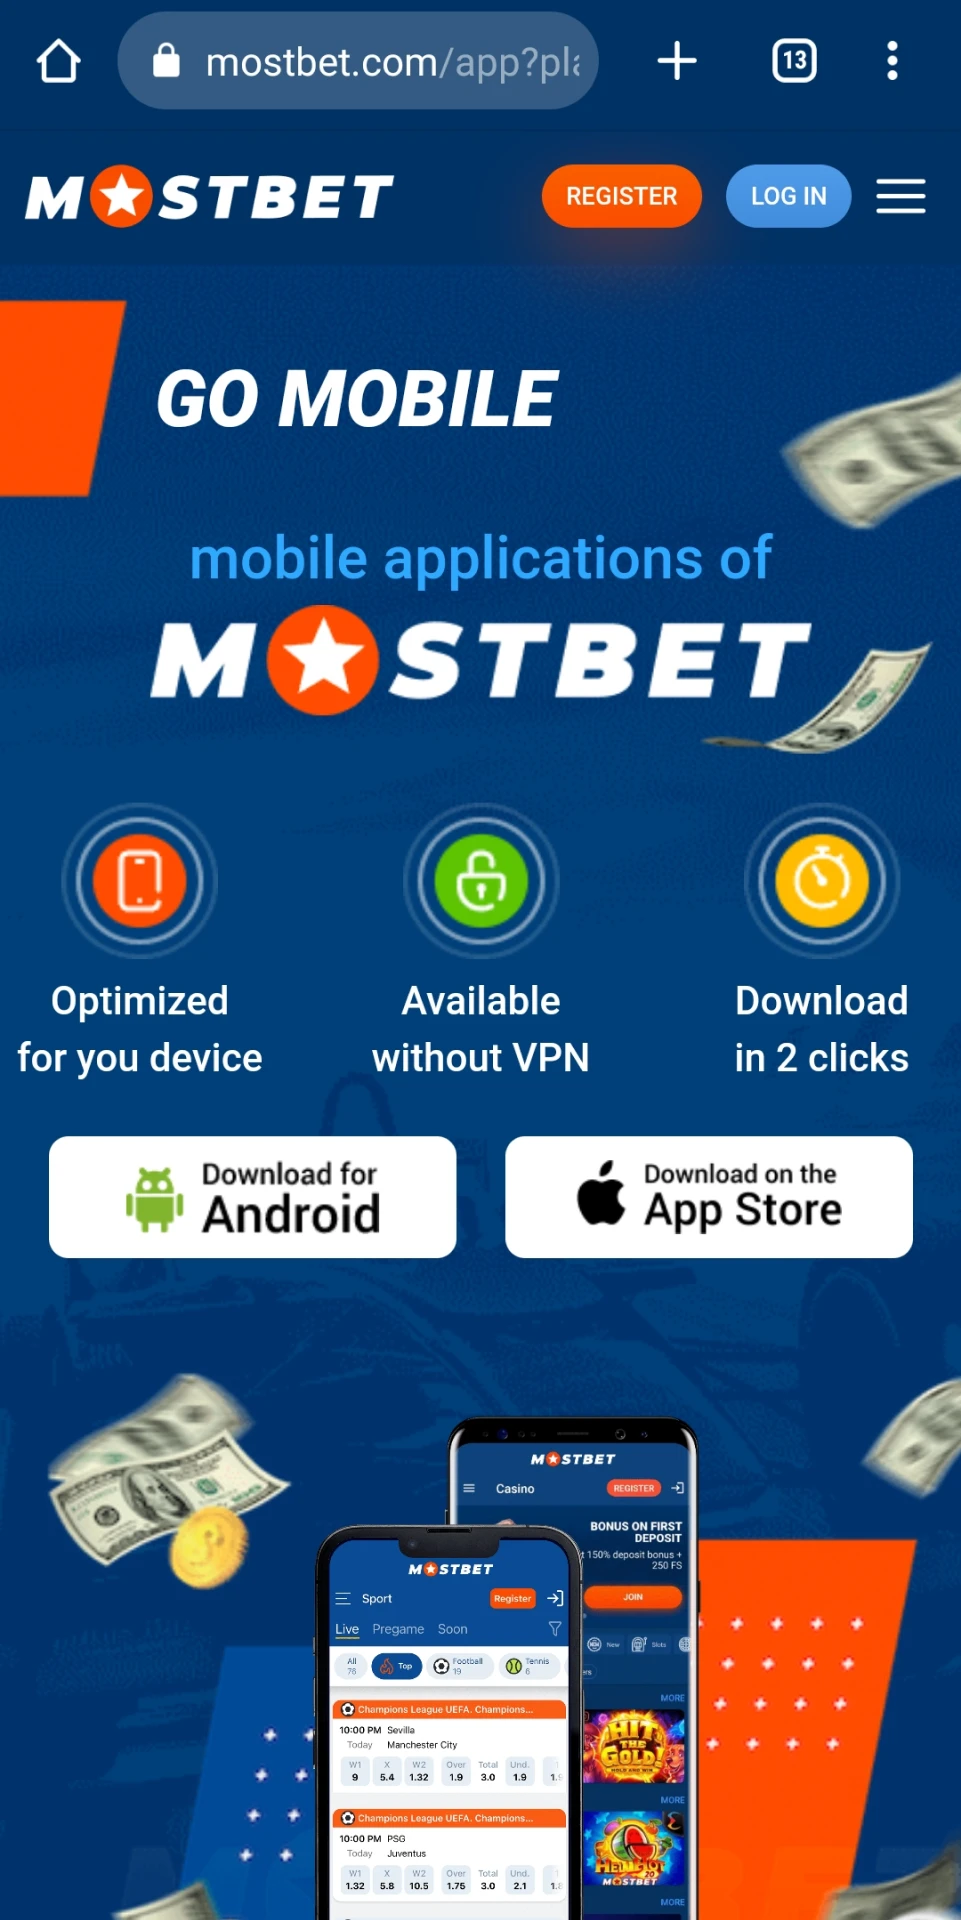 Baixe o aplicativo Mostbet para jogar Aviator no seu dispositivo Android.